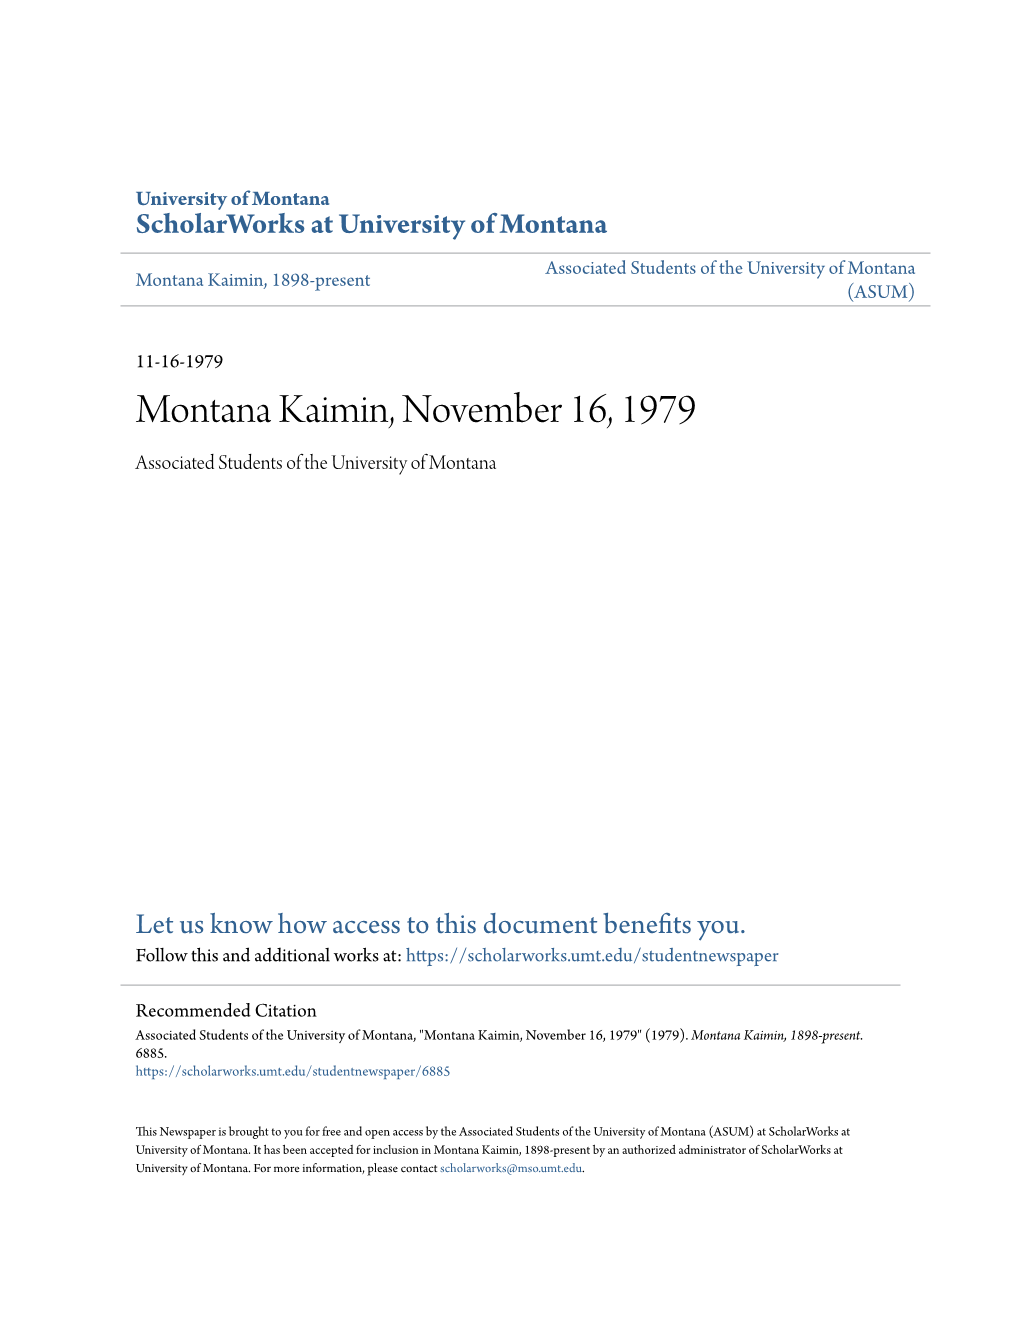 Montana Kaimin, November 16, 1979 Associated Students of the University of Montana